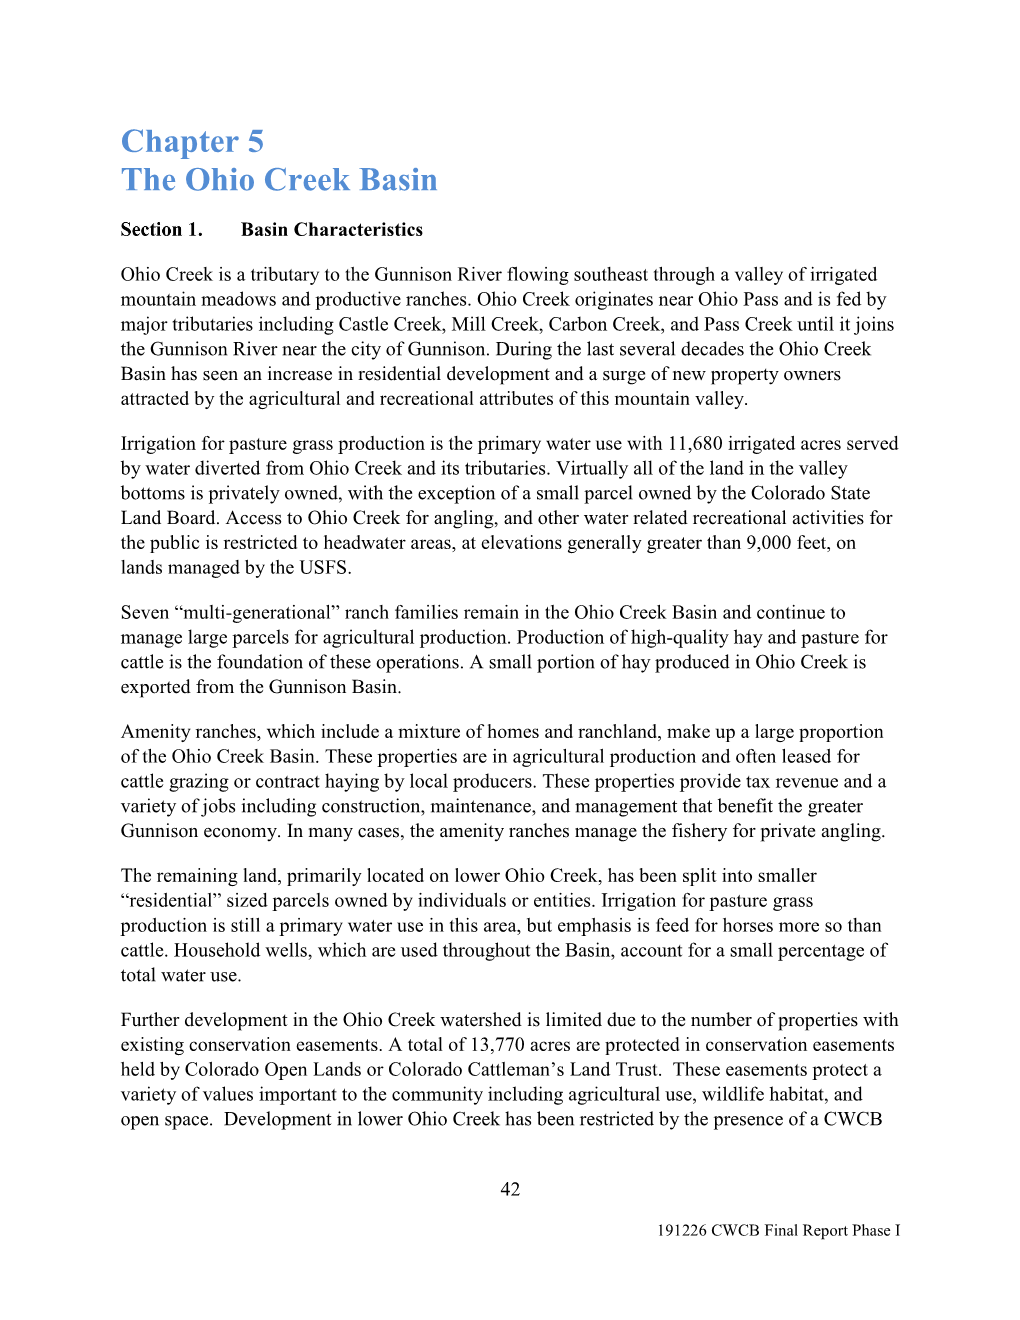 Chapter 5 the Ohio Creek Basin